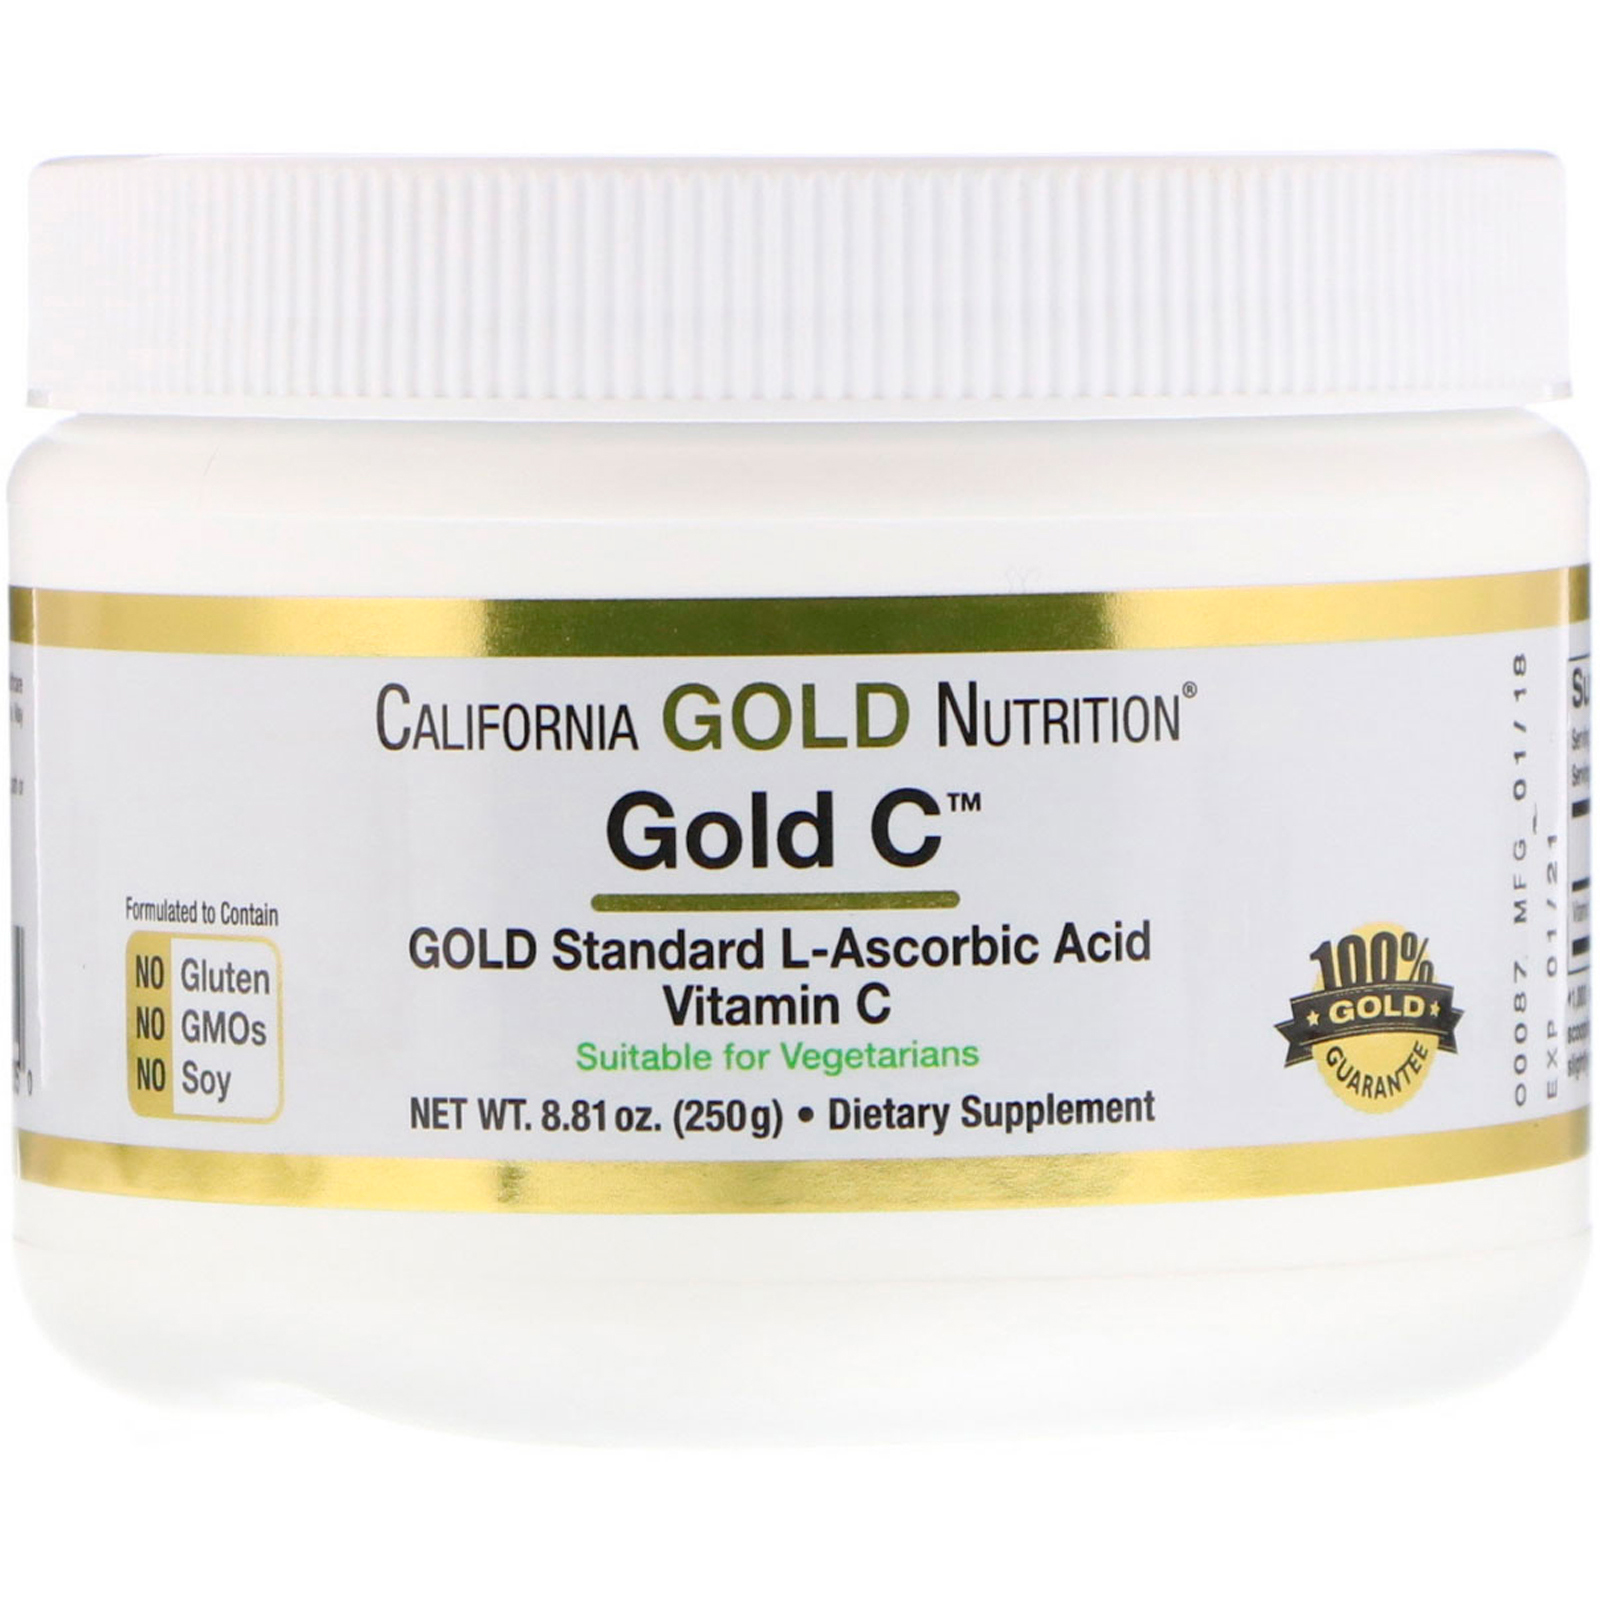 Gold c vitamin c. Gold c California Gold Nutrition. Витамин с California Gold Nutrition. Витамин с Калифорния Голд Нутришн. Коллаген Голд порошок.